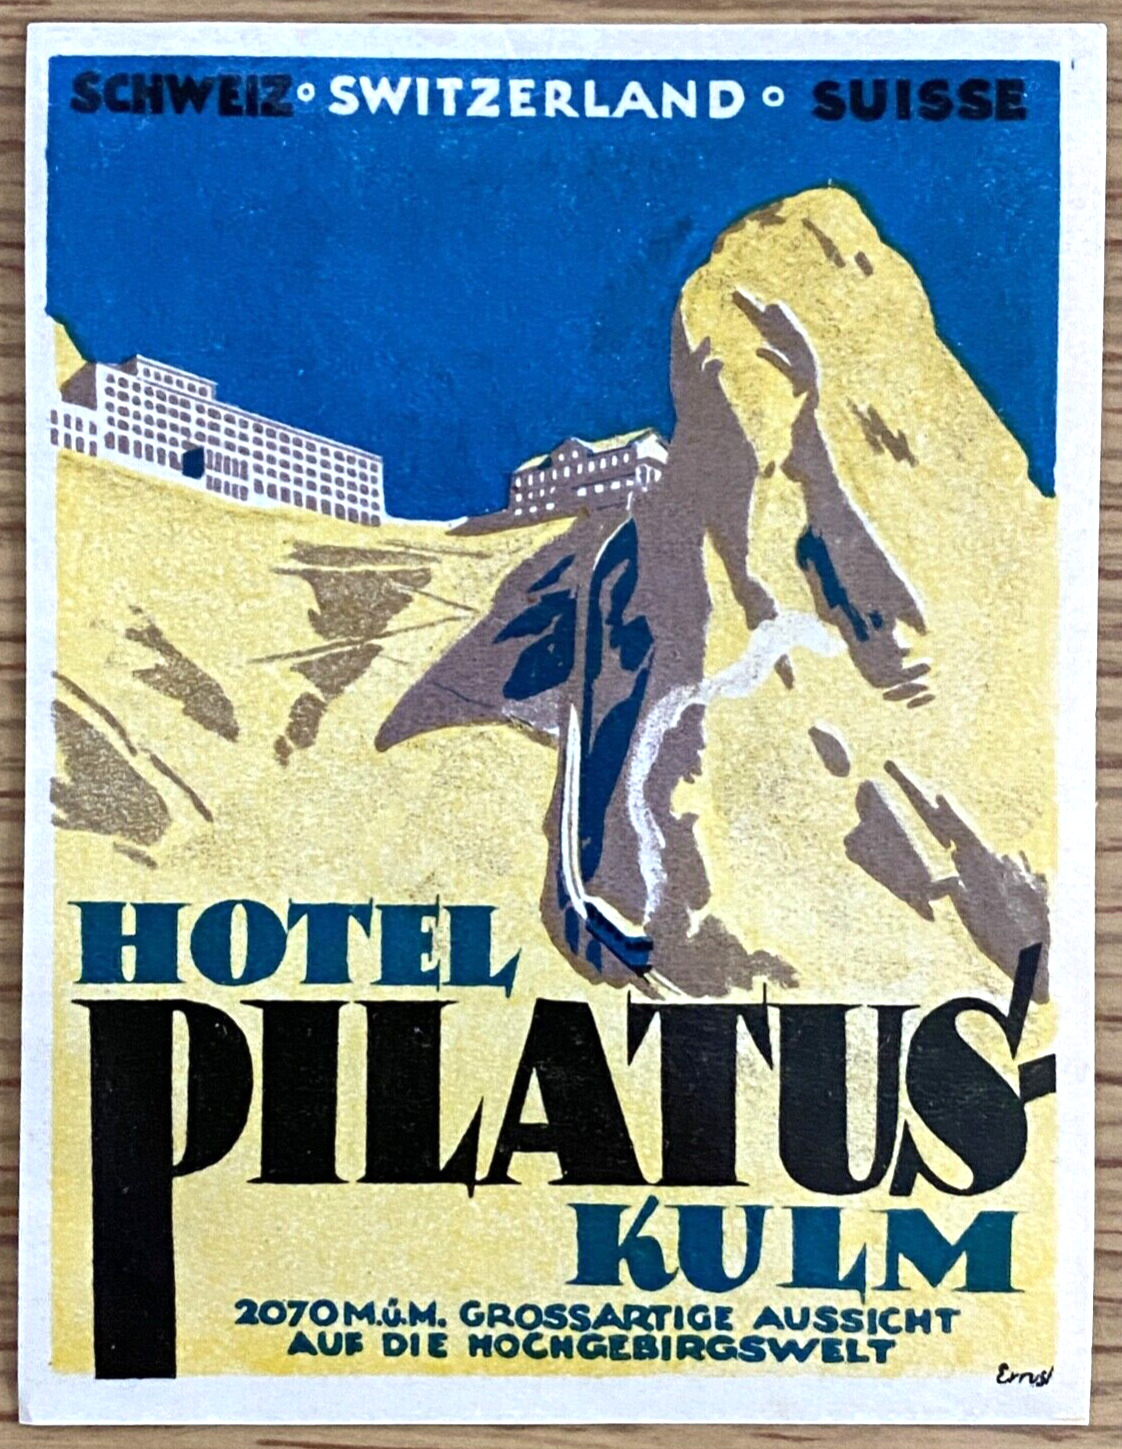 1930s HOTEL PILATUS-KULM vintage luggage label SWITZERLAND SUISSE drawn by Ernst